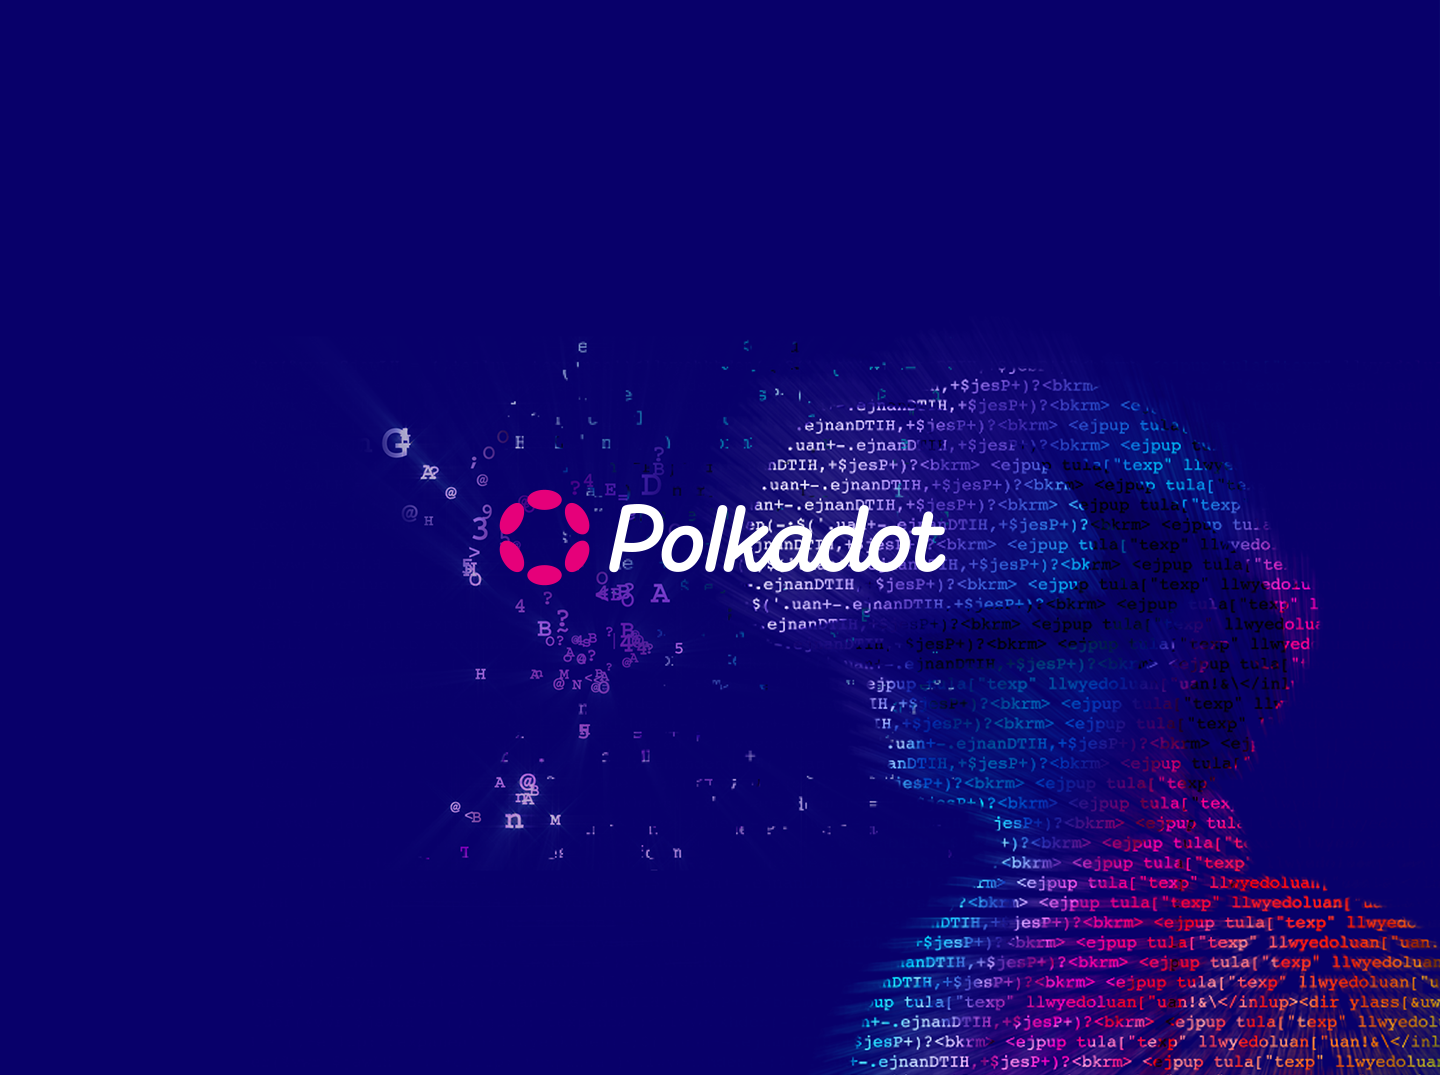 Polkadot: Polkadot Sub0 Event Identity